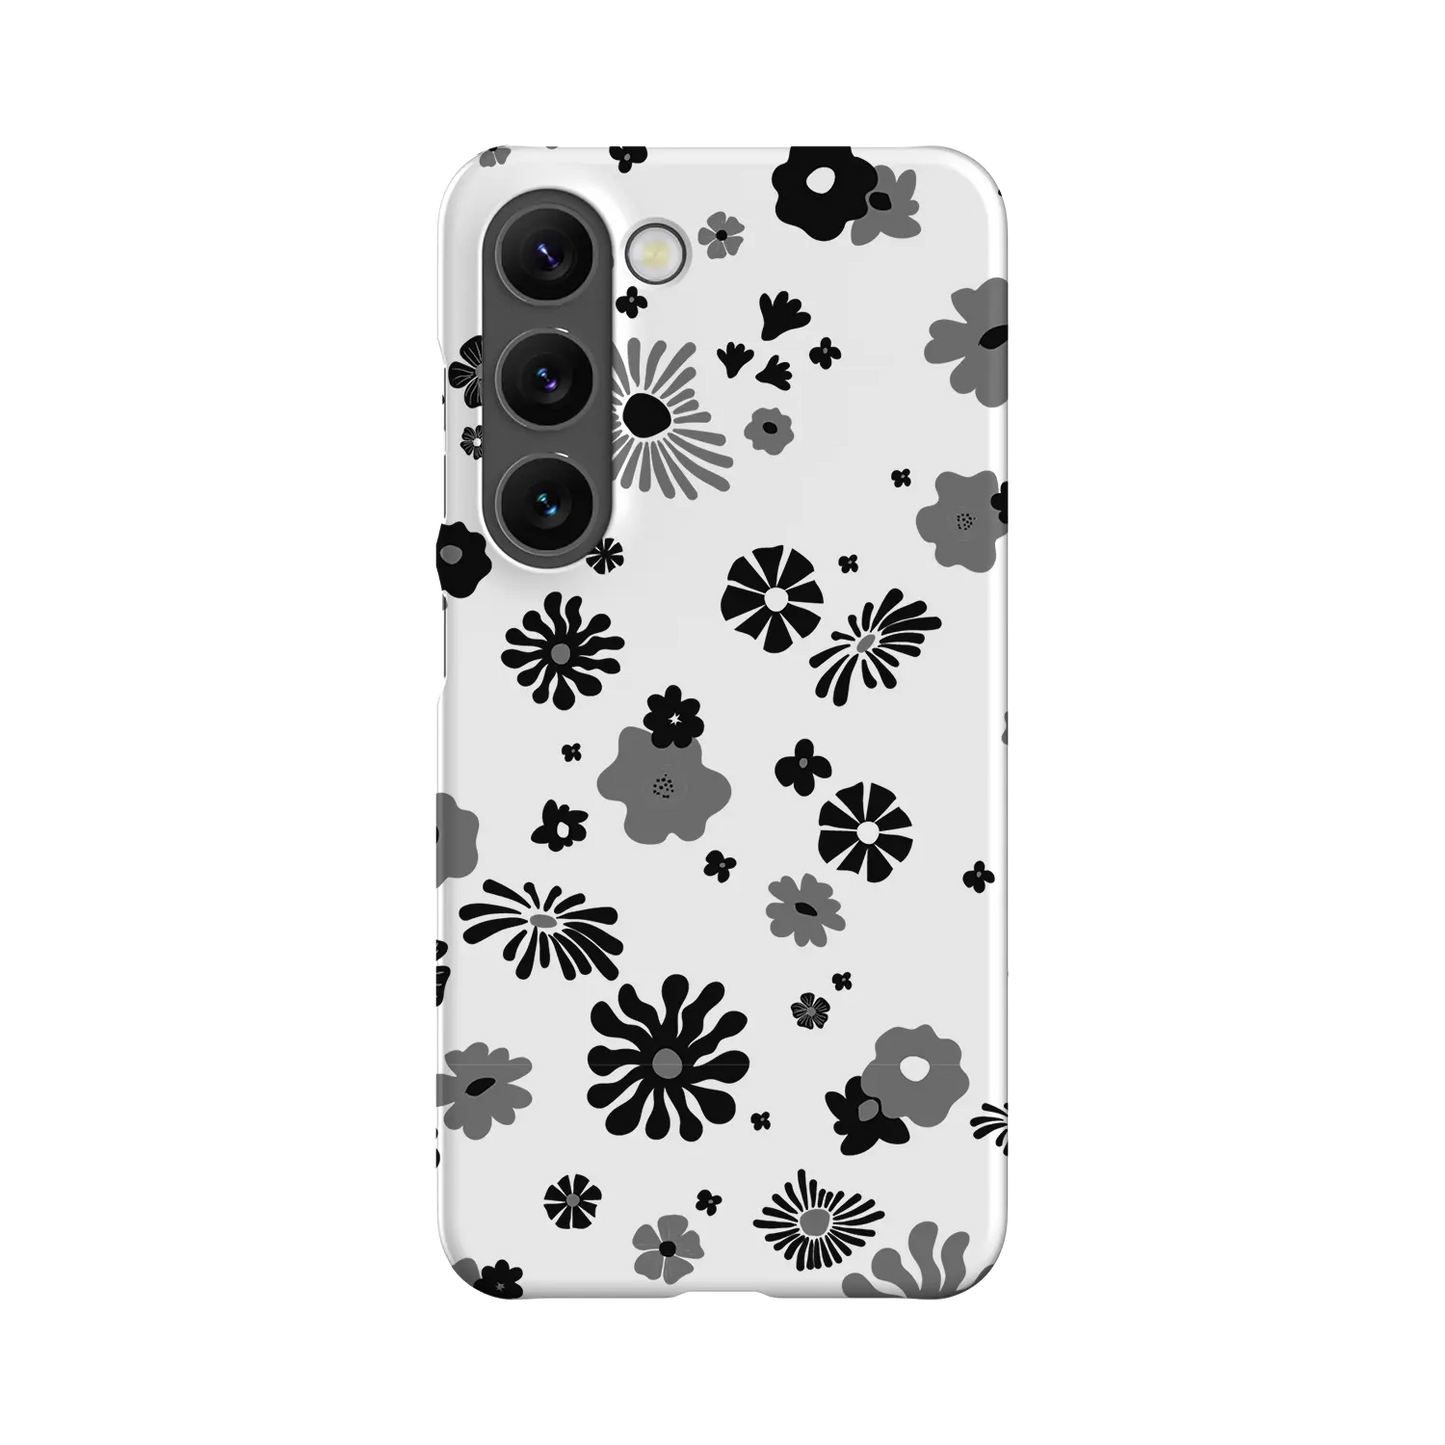 Hippie Flowers - Coque Galaxy S personnalisé